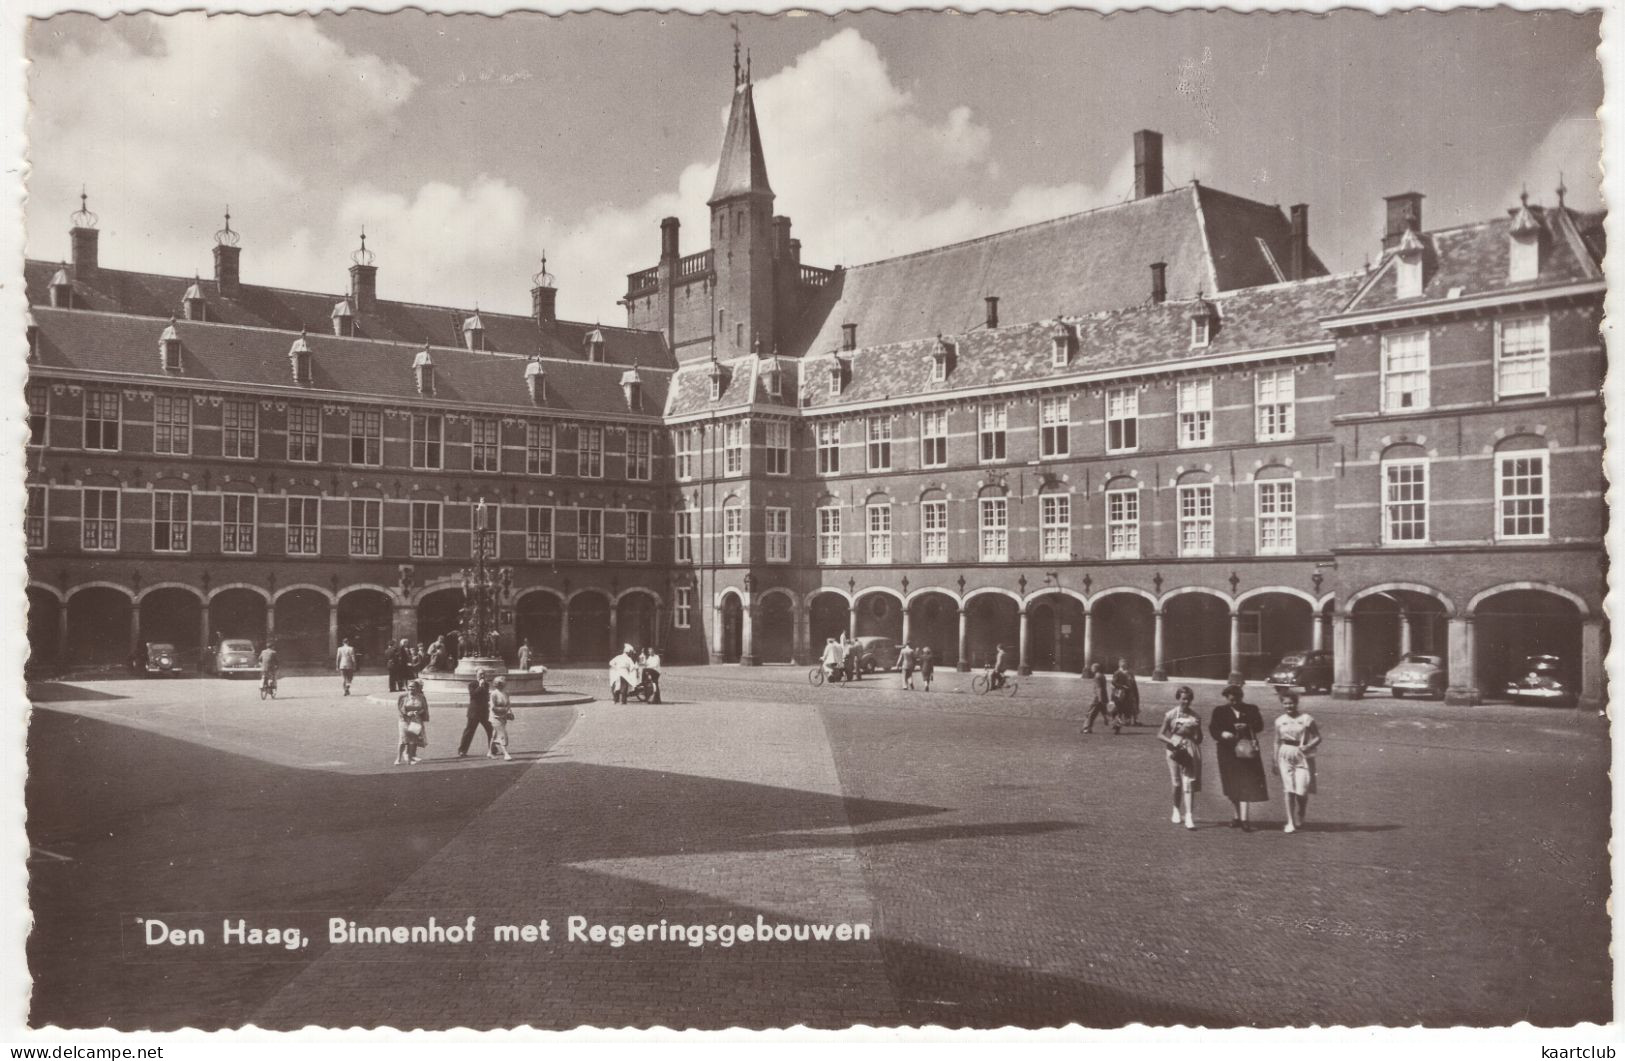 Den Haag: OLDTIMER AUTO'S / CARS & BICYCLES / FIETSEN - Binnenhof Met Regeringsgebouwen - (Holland) - Toerisme